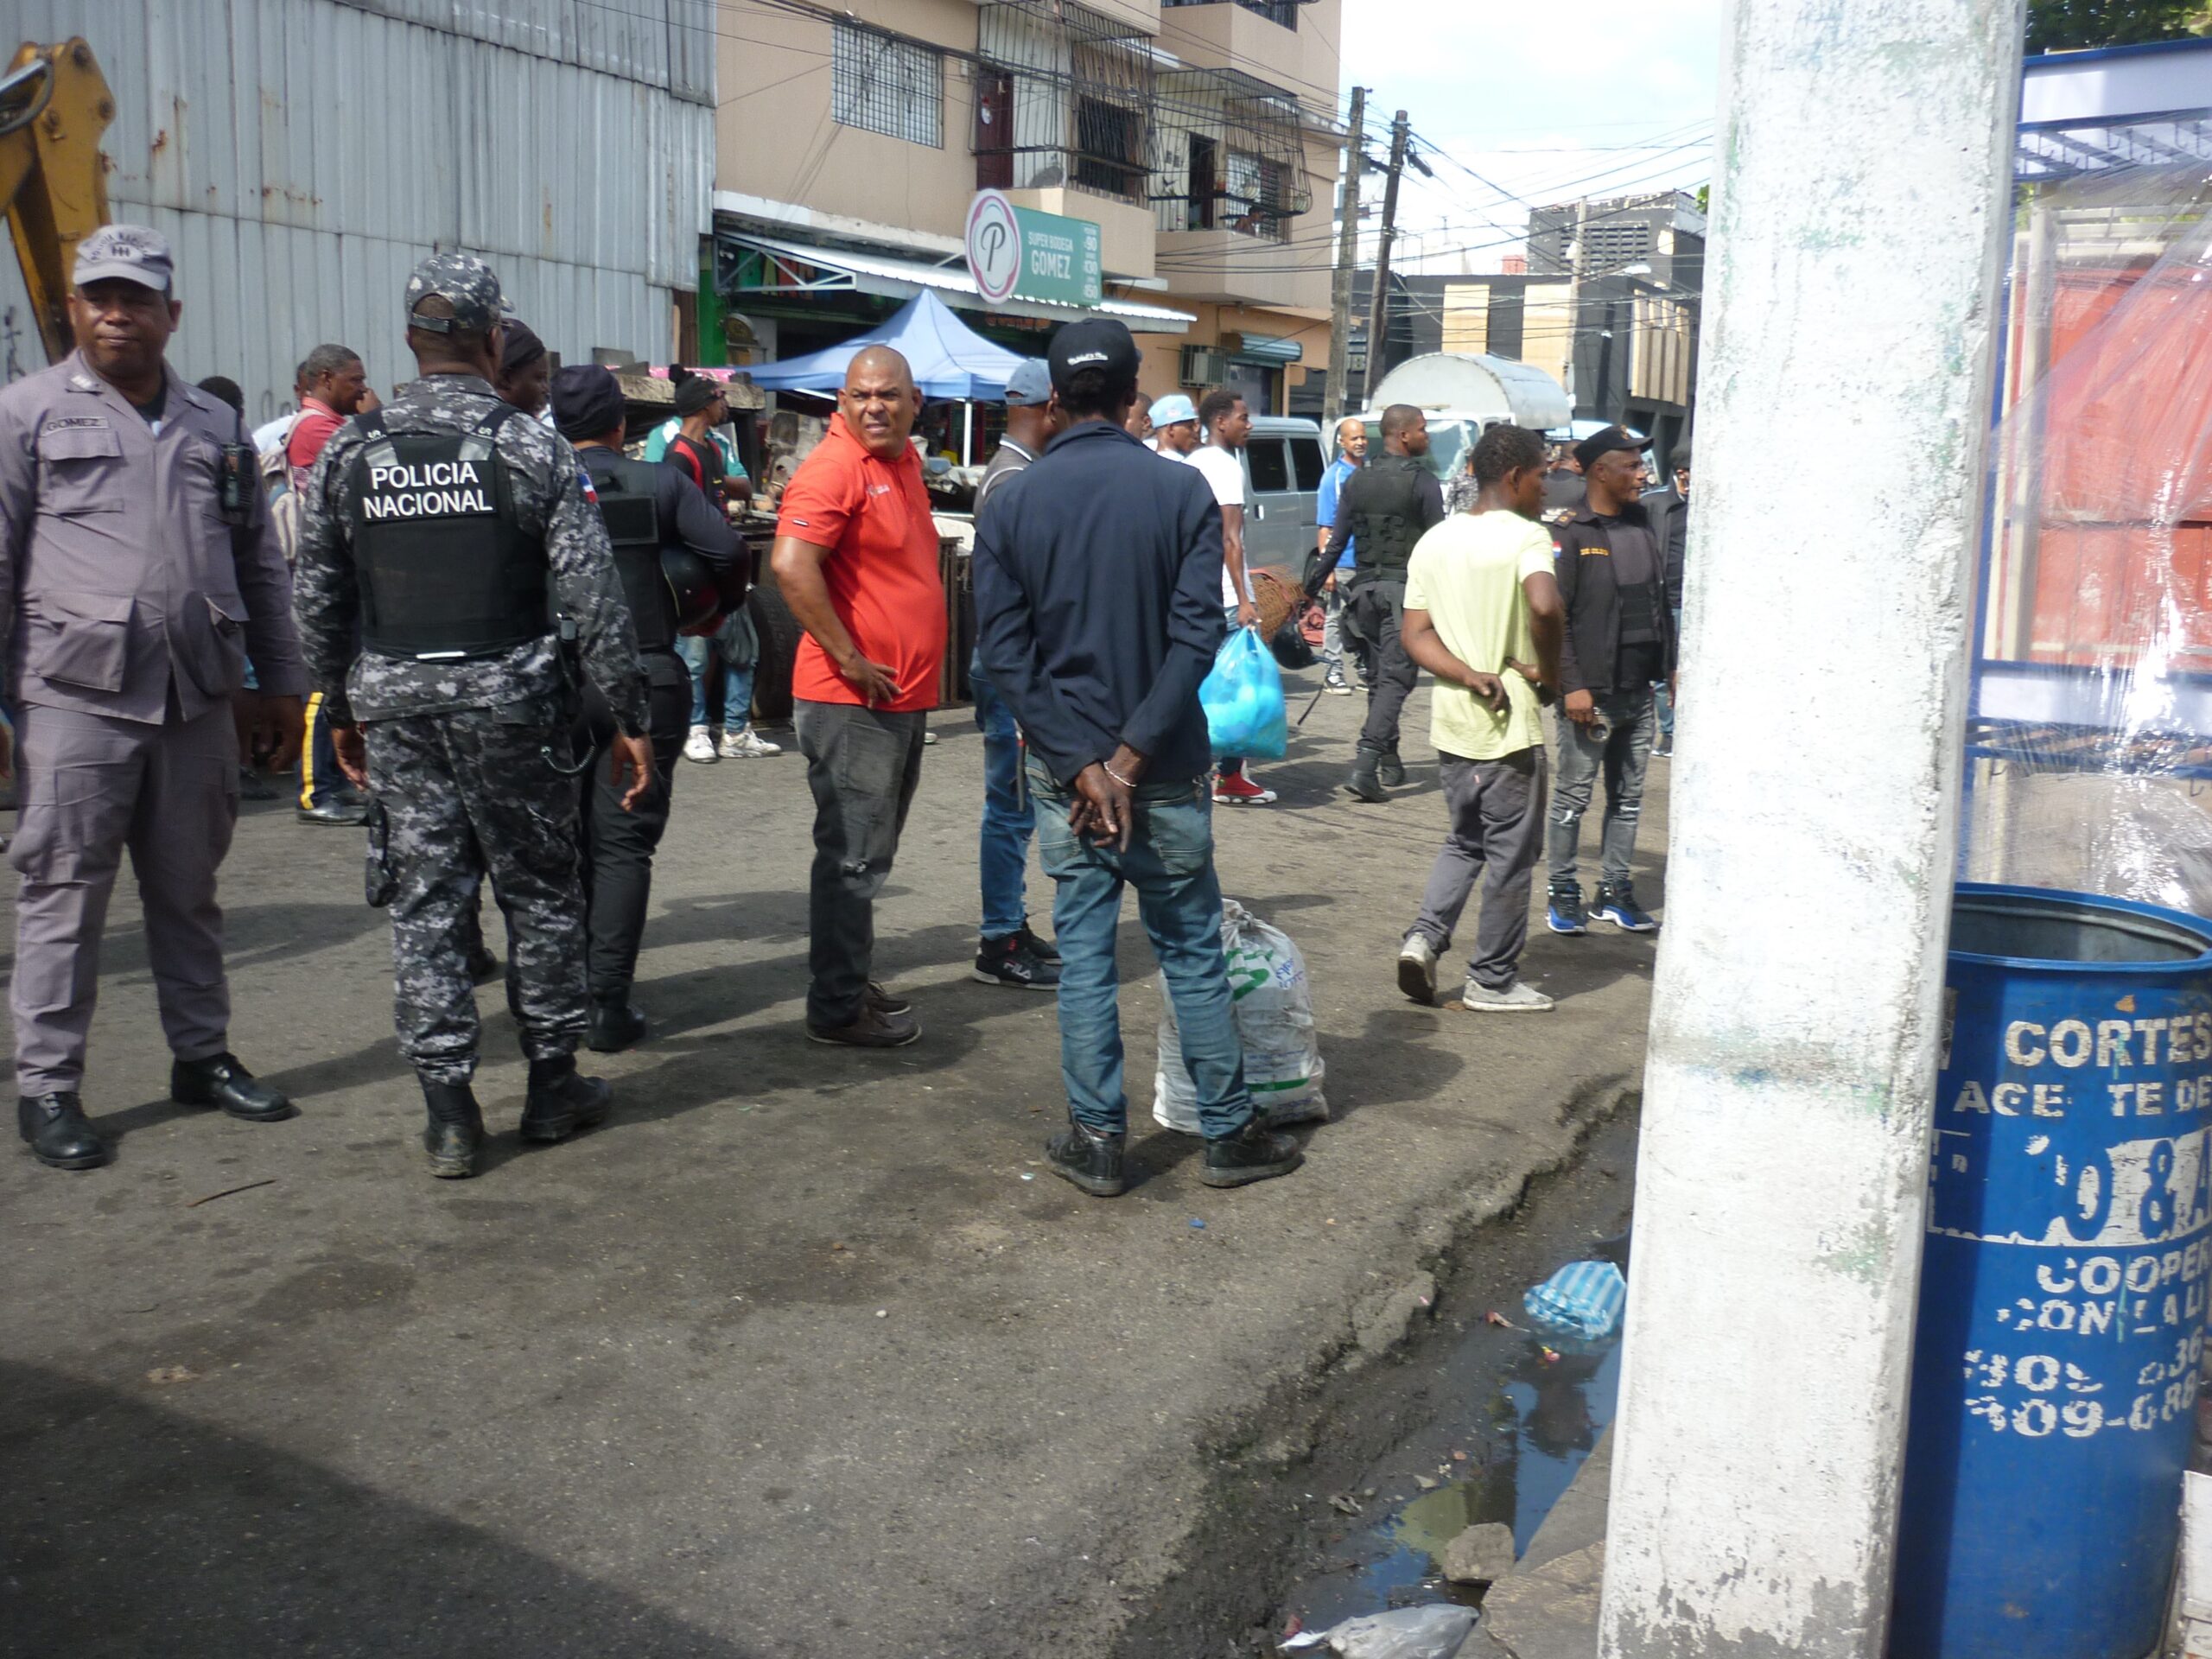 Aparatoso desalojo en Santo Domingo causa indignación por inusitado…